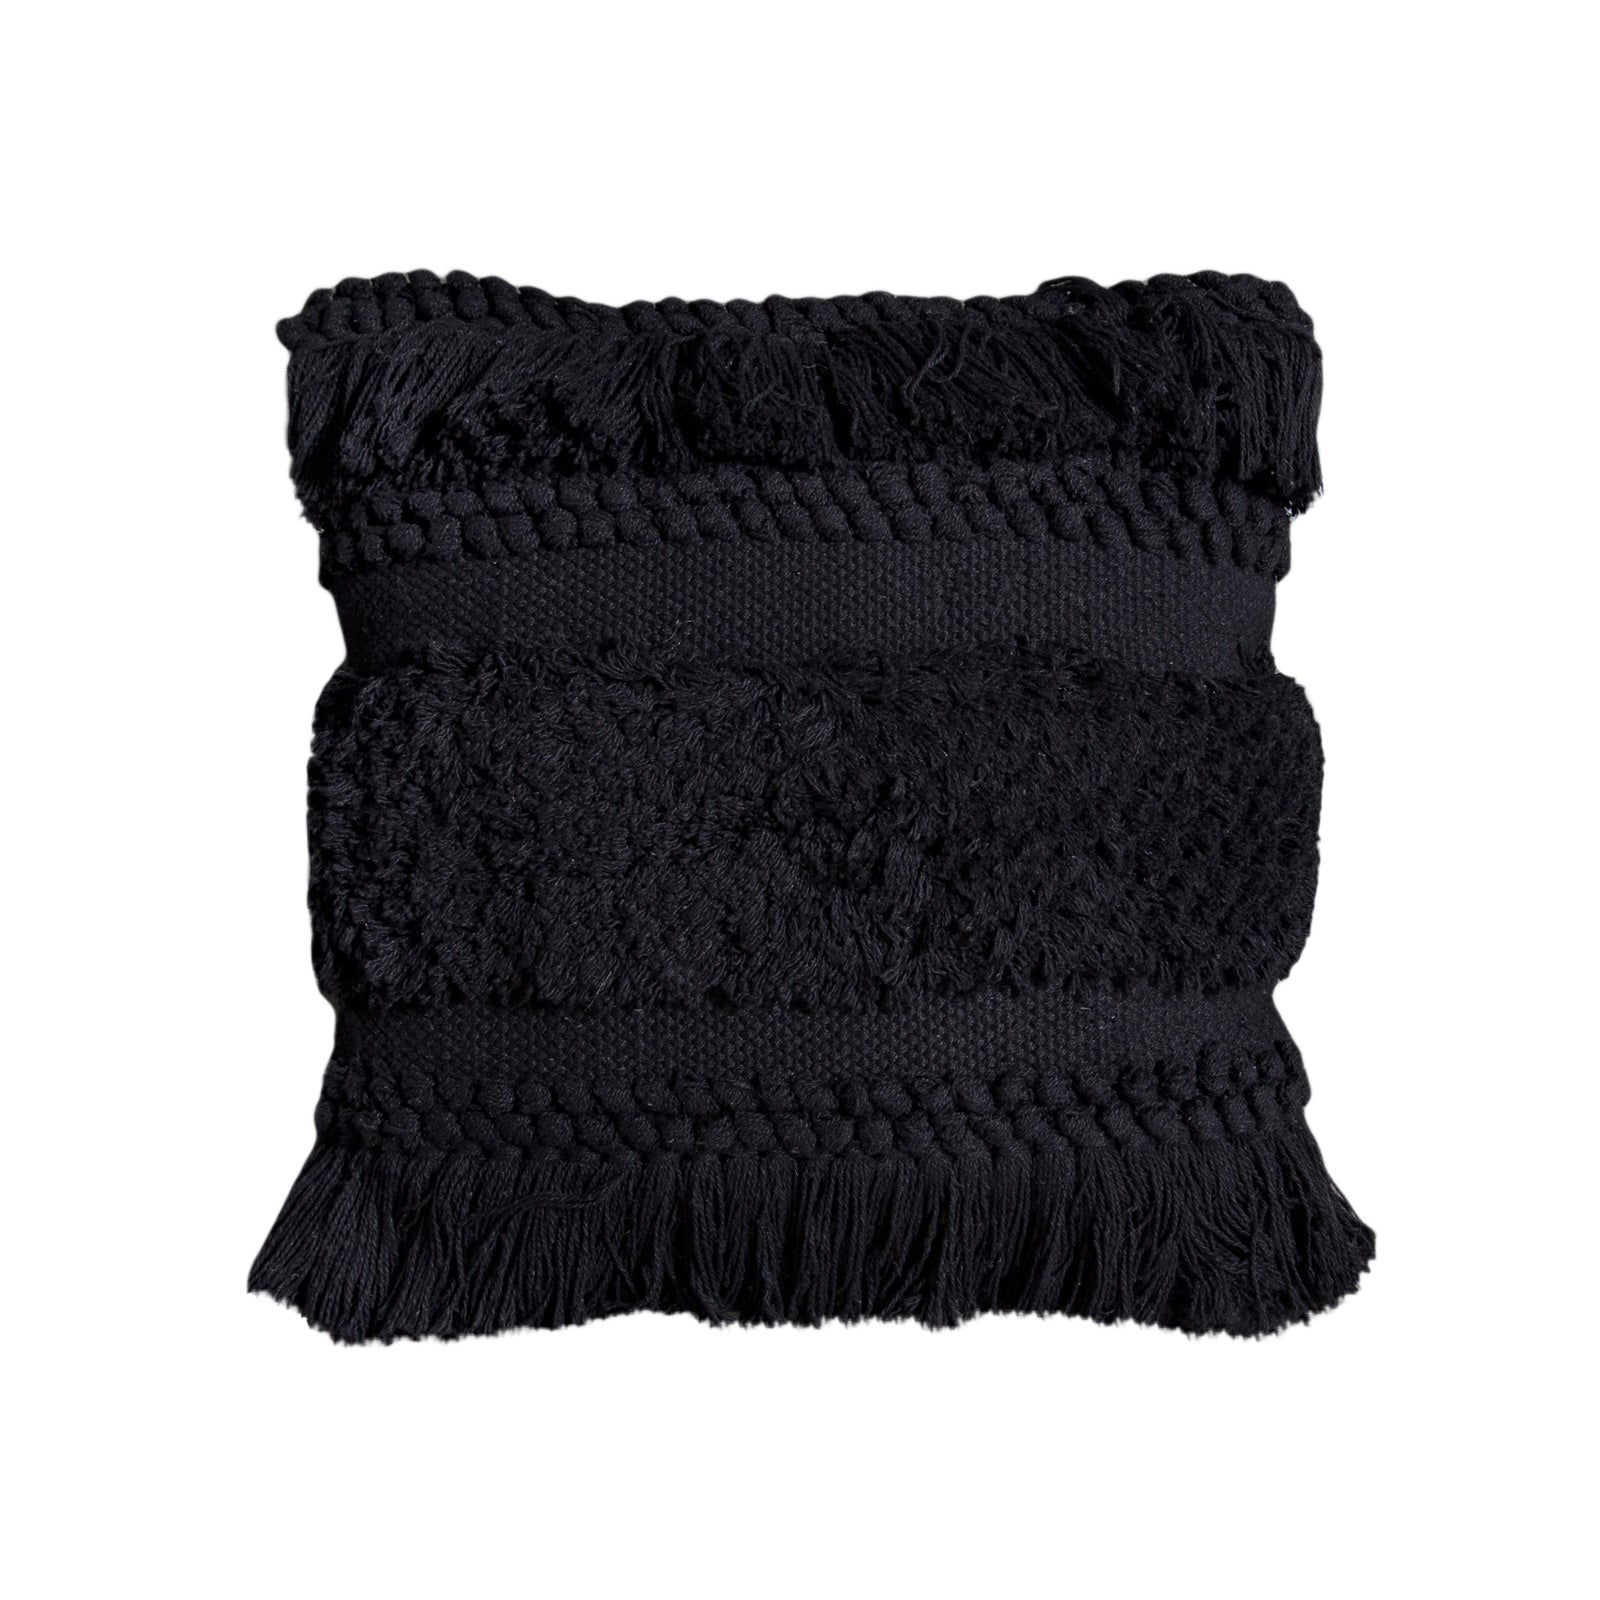 Bohemian Macrame Cushion – Black